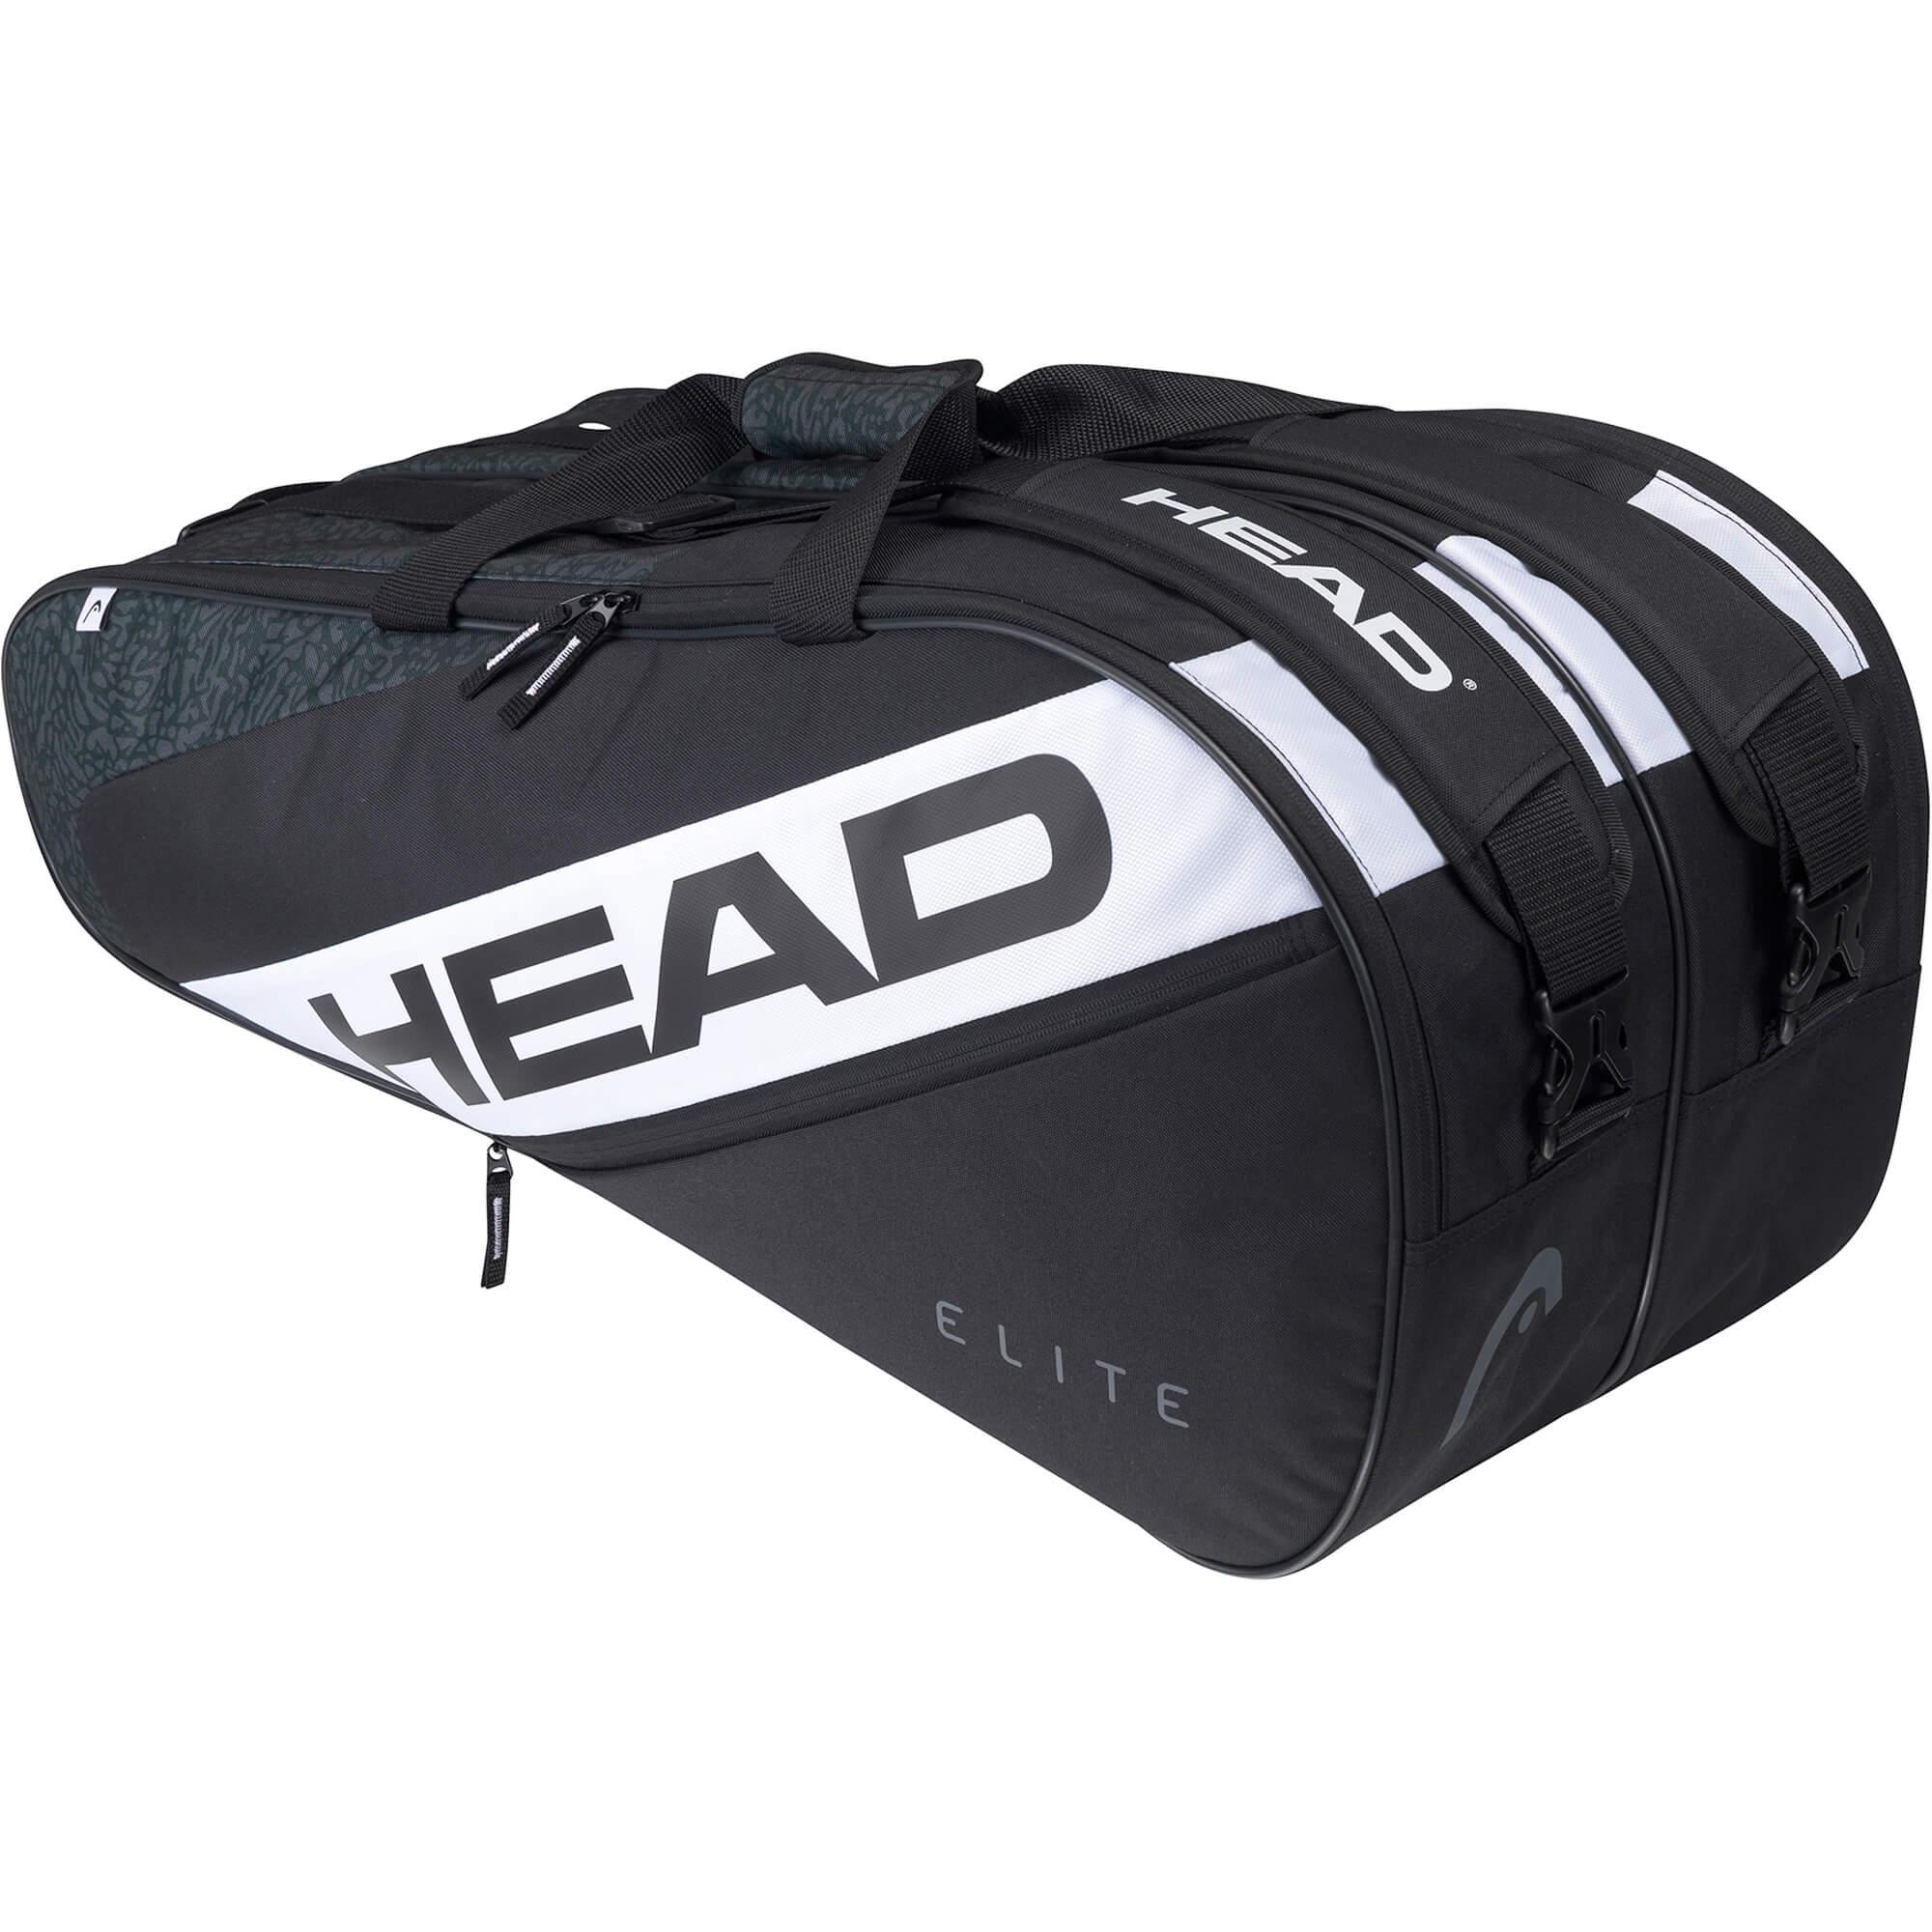 Head Elite Supercombi 9 Racket Bag - Black/White